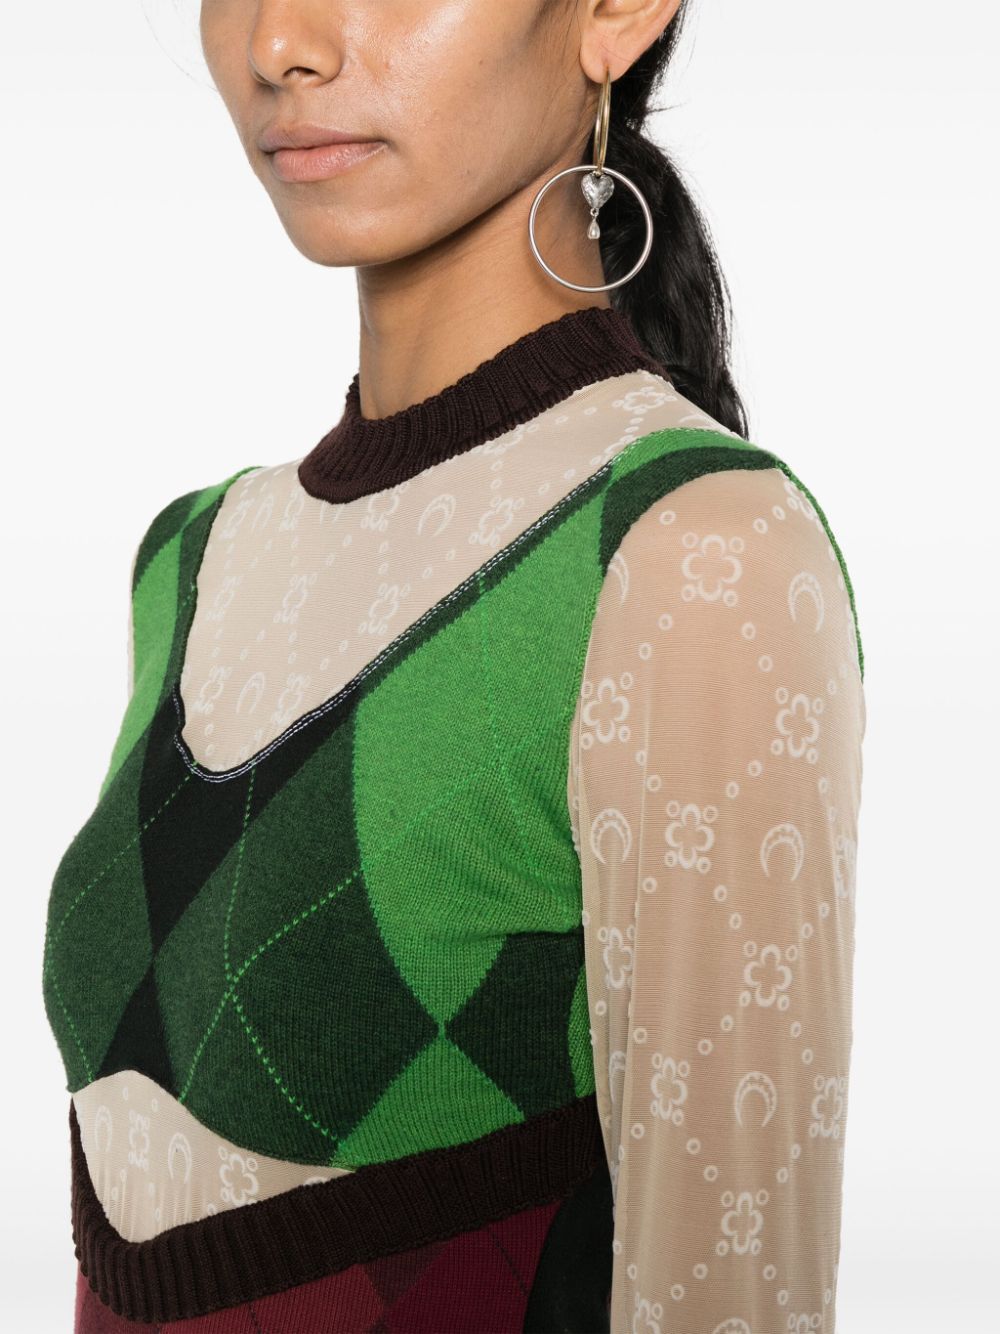 MARINE SERRE Elegant Green Wool Long Dress for Women - FW23 Collection